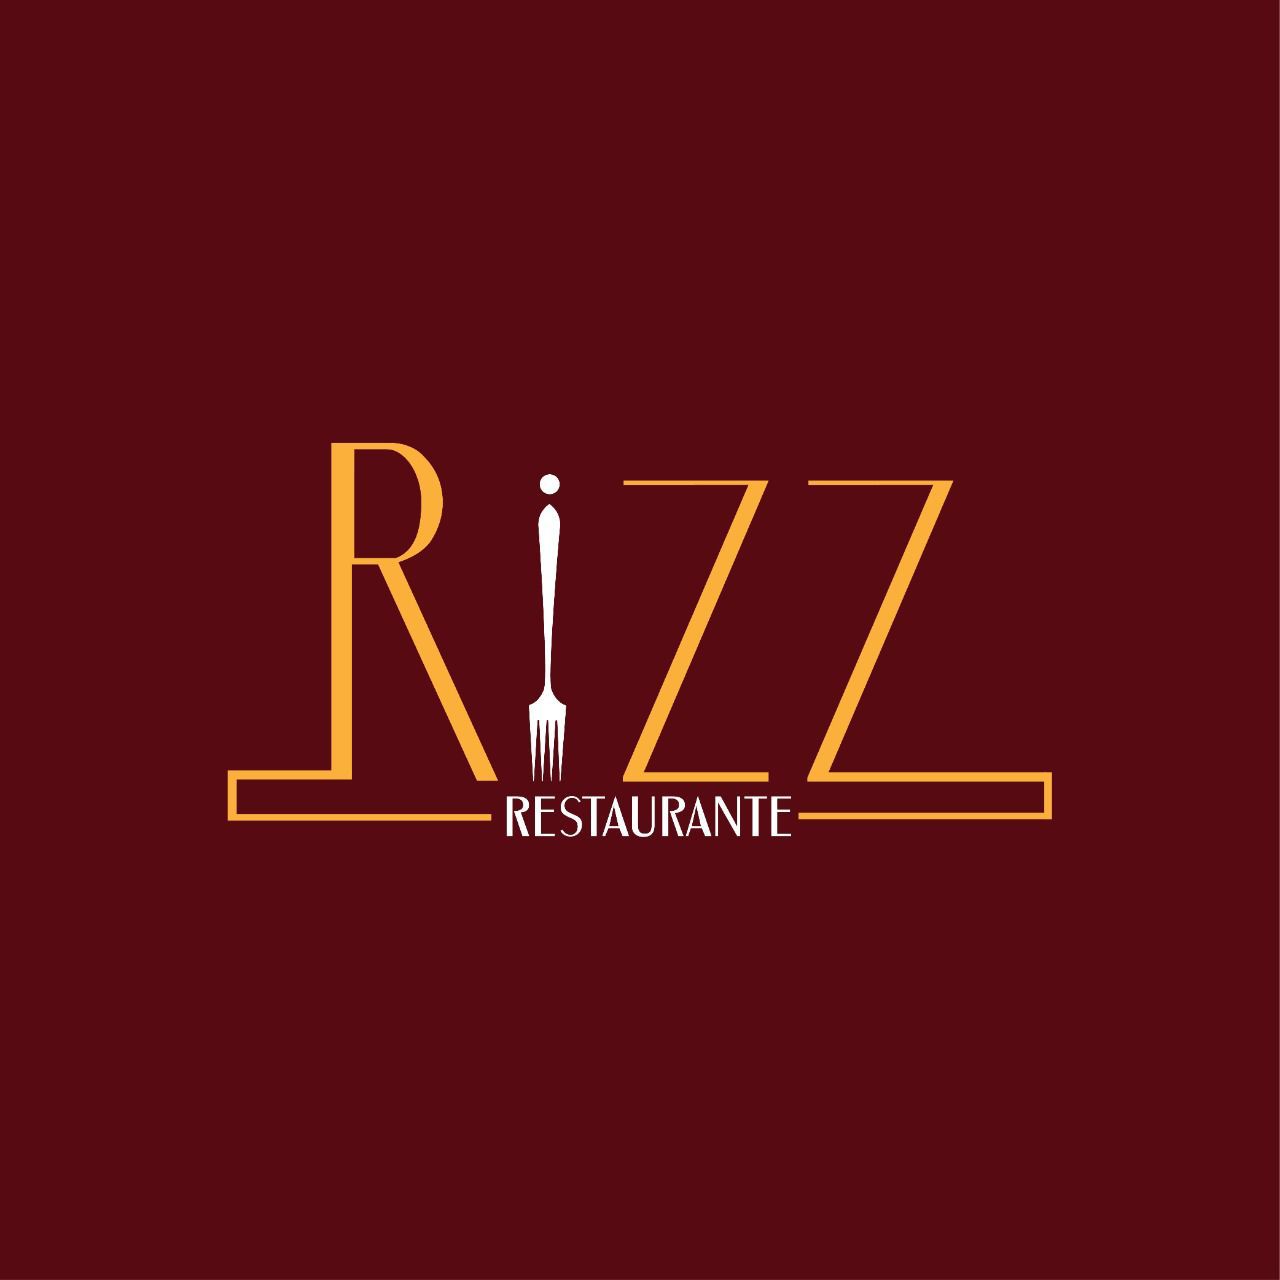 Rizz Restaurante